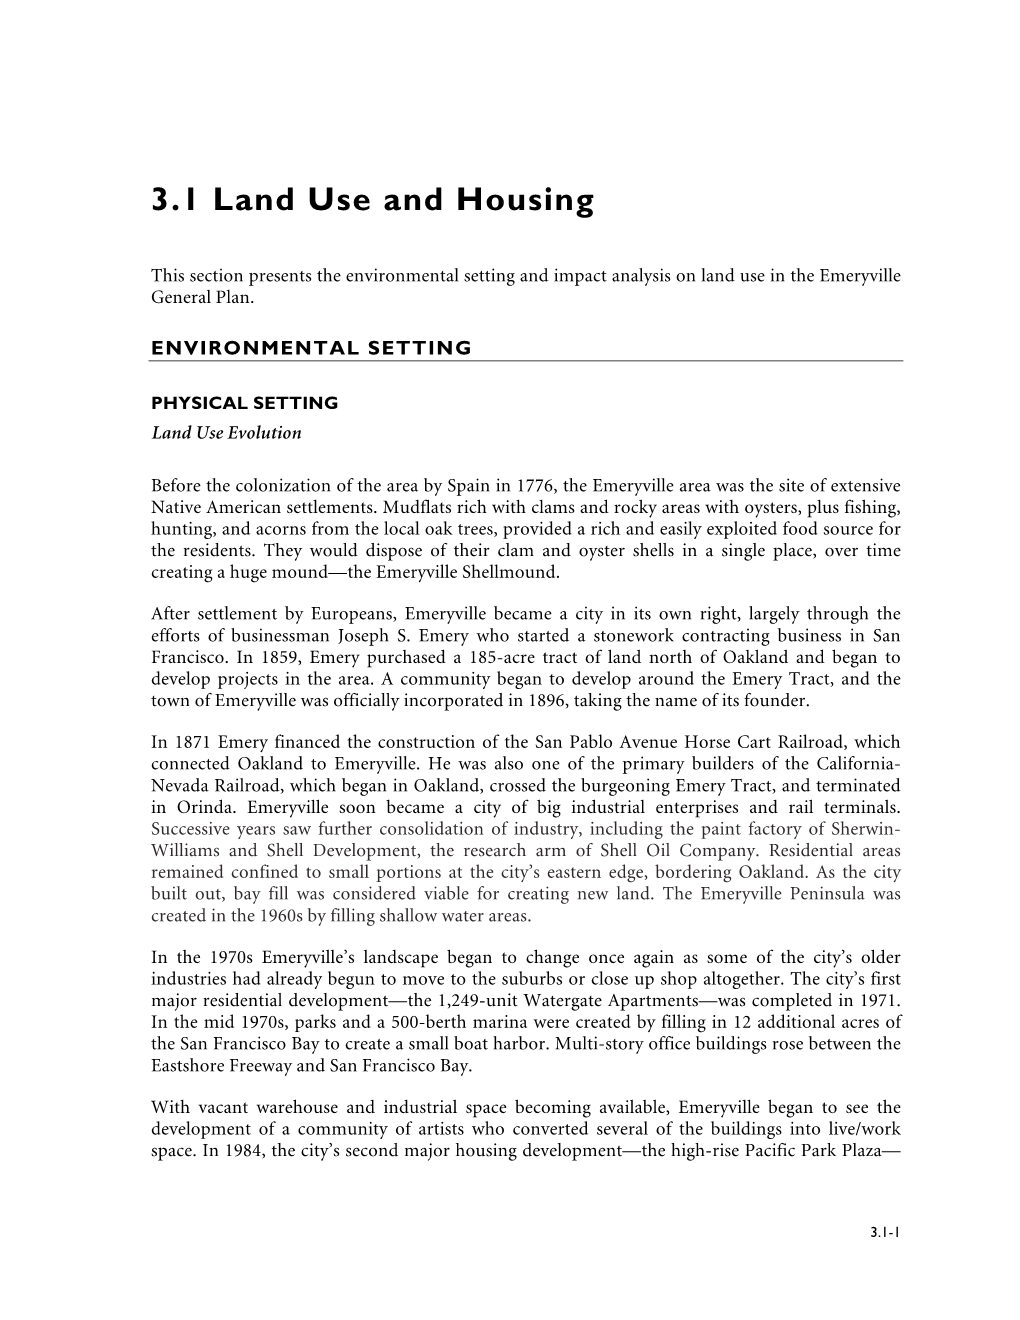 3.1 Land Use & Housing